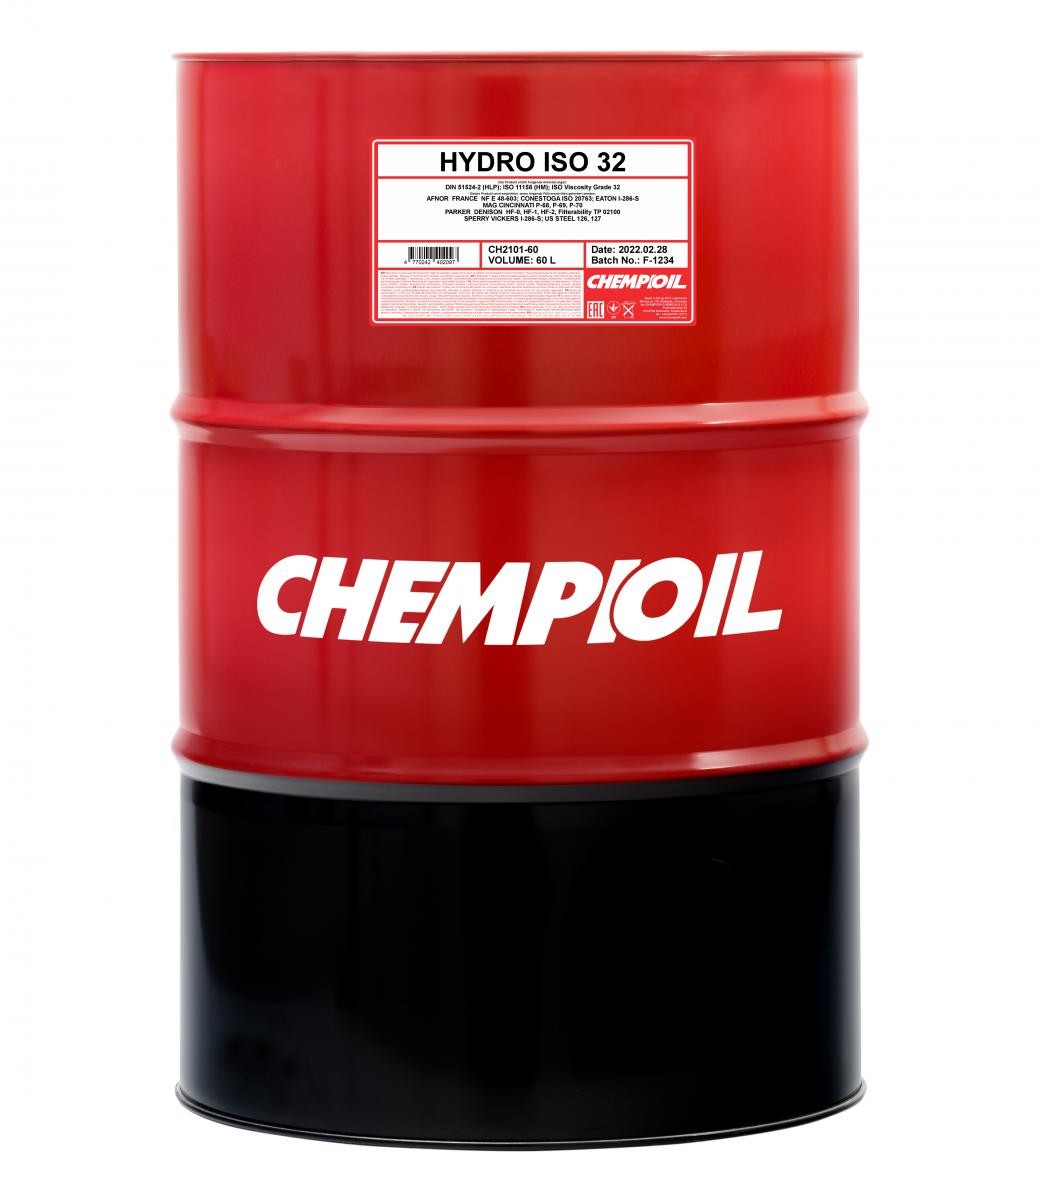 CHEMPIOIL Hydro, ISO 32 Inhalt: 60l ISO 11158 HM, DIN 51524-2 HLP, Afnor NF E 48 Hydrauliköl CH2101-60 kaufen